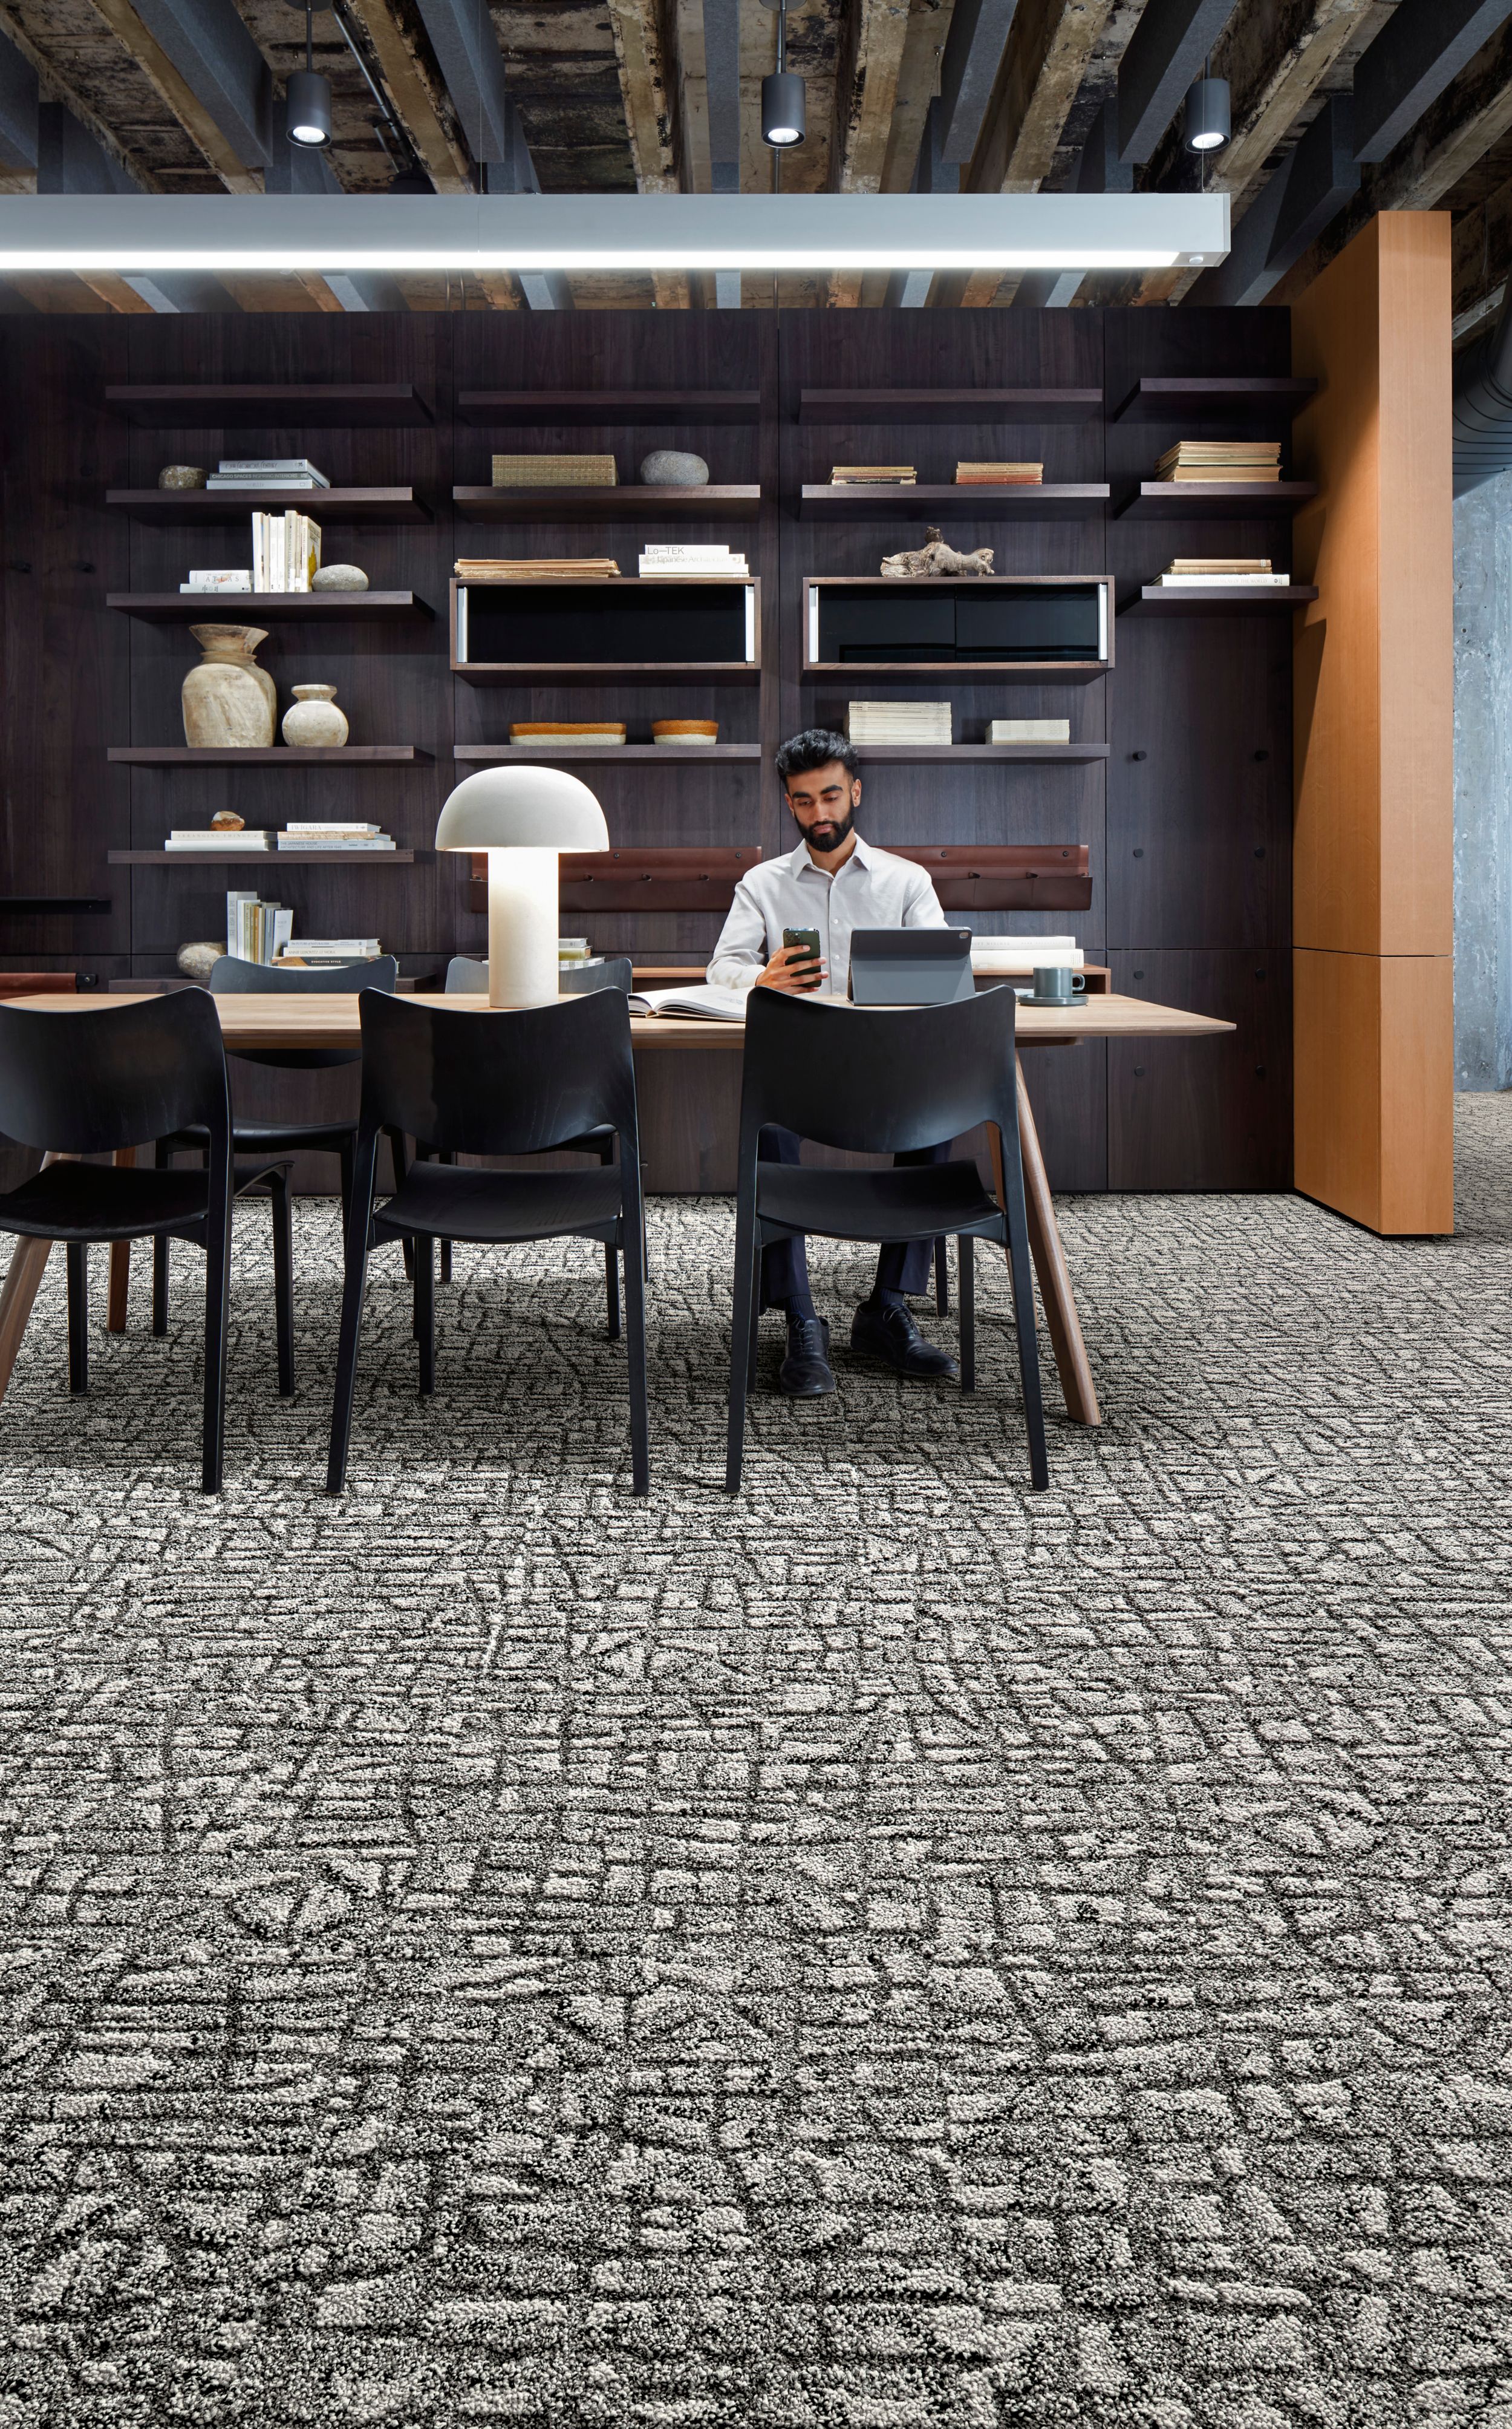 Interface E610 carpet tile in conference room número de imagen 1